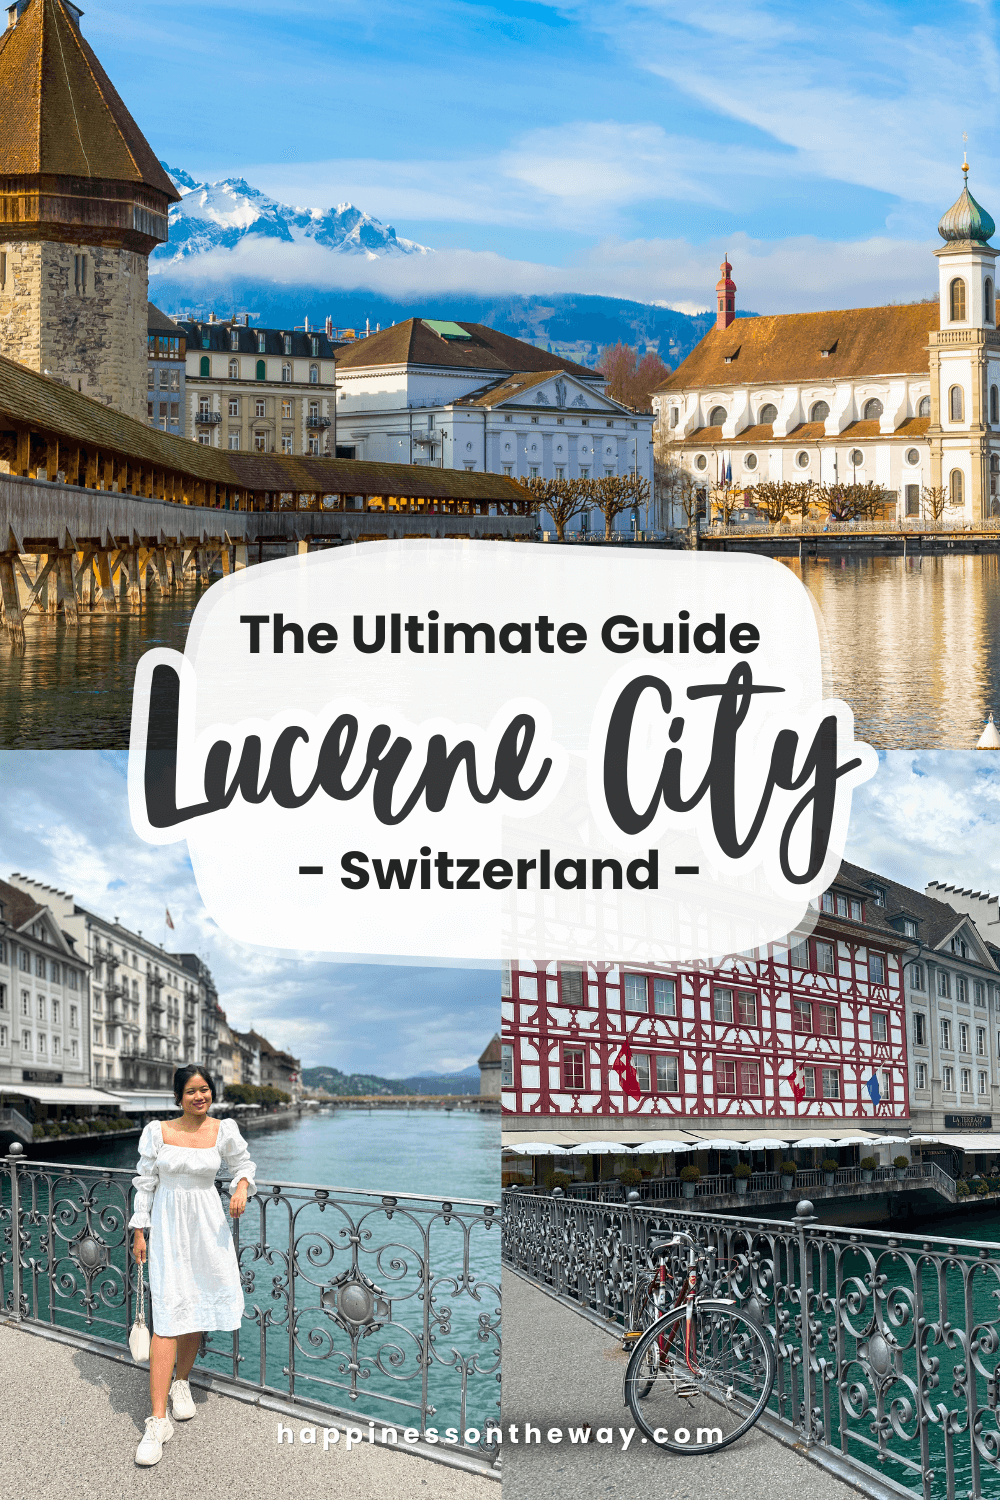 Lucerne City in Switzerland Travel Guide